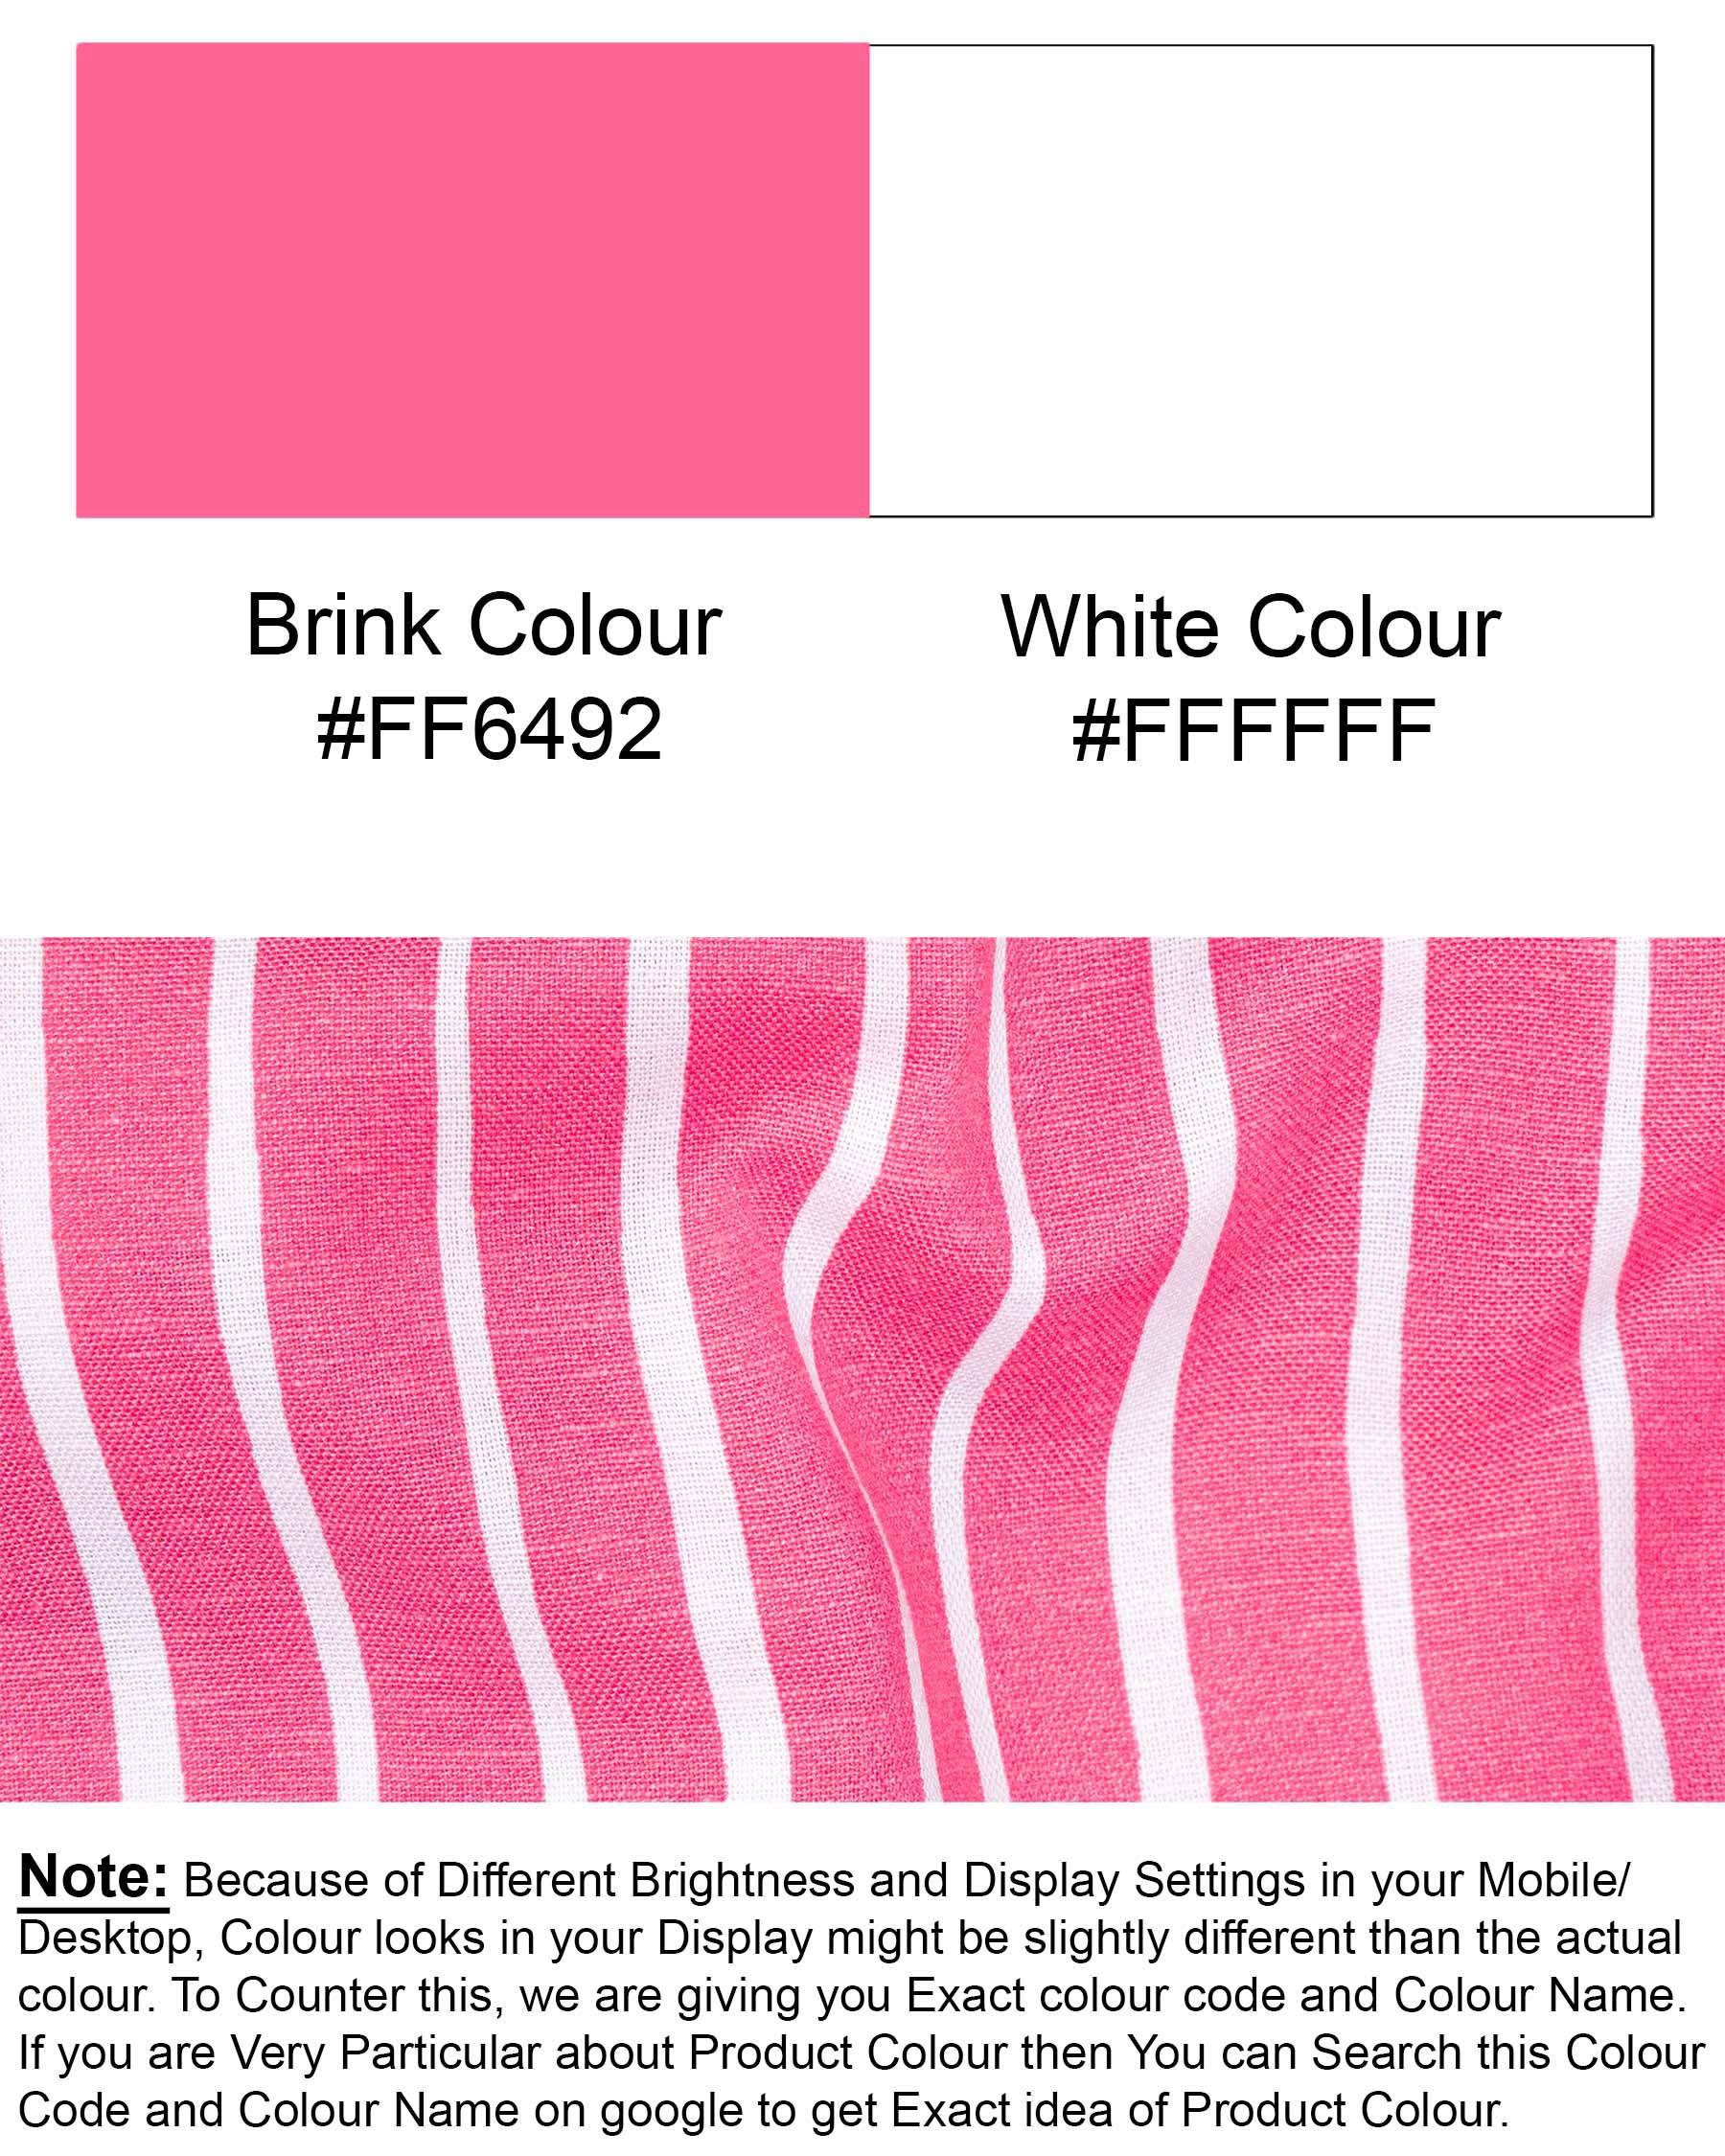 Brink Pink with White Striped Premium Tencel Kurta Shirt 6944-KS-38,6944-KS-38,6944-KS-39,6944-KS-39,6944-KS-40,6944-KS-40,6944-KS-42,6944-KS-42,6944-KS-44,6944-KS-44,6944-KS-46,6944-KS-46,6944-KS-48,6944-KS-48,6944-KS-50,6944-KS-50,6944-KS-52,6944-KS-52